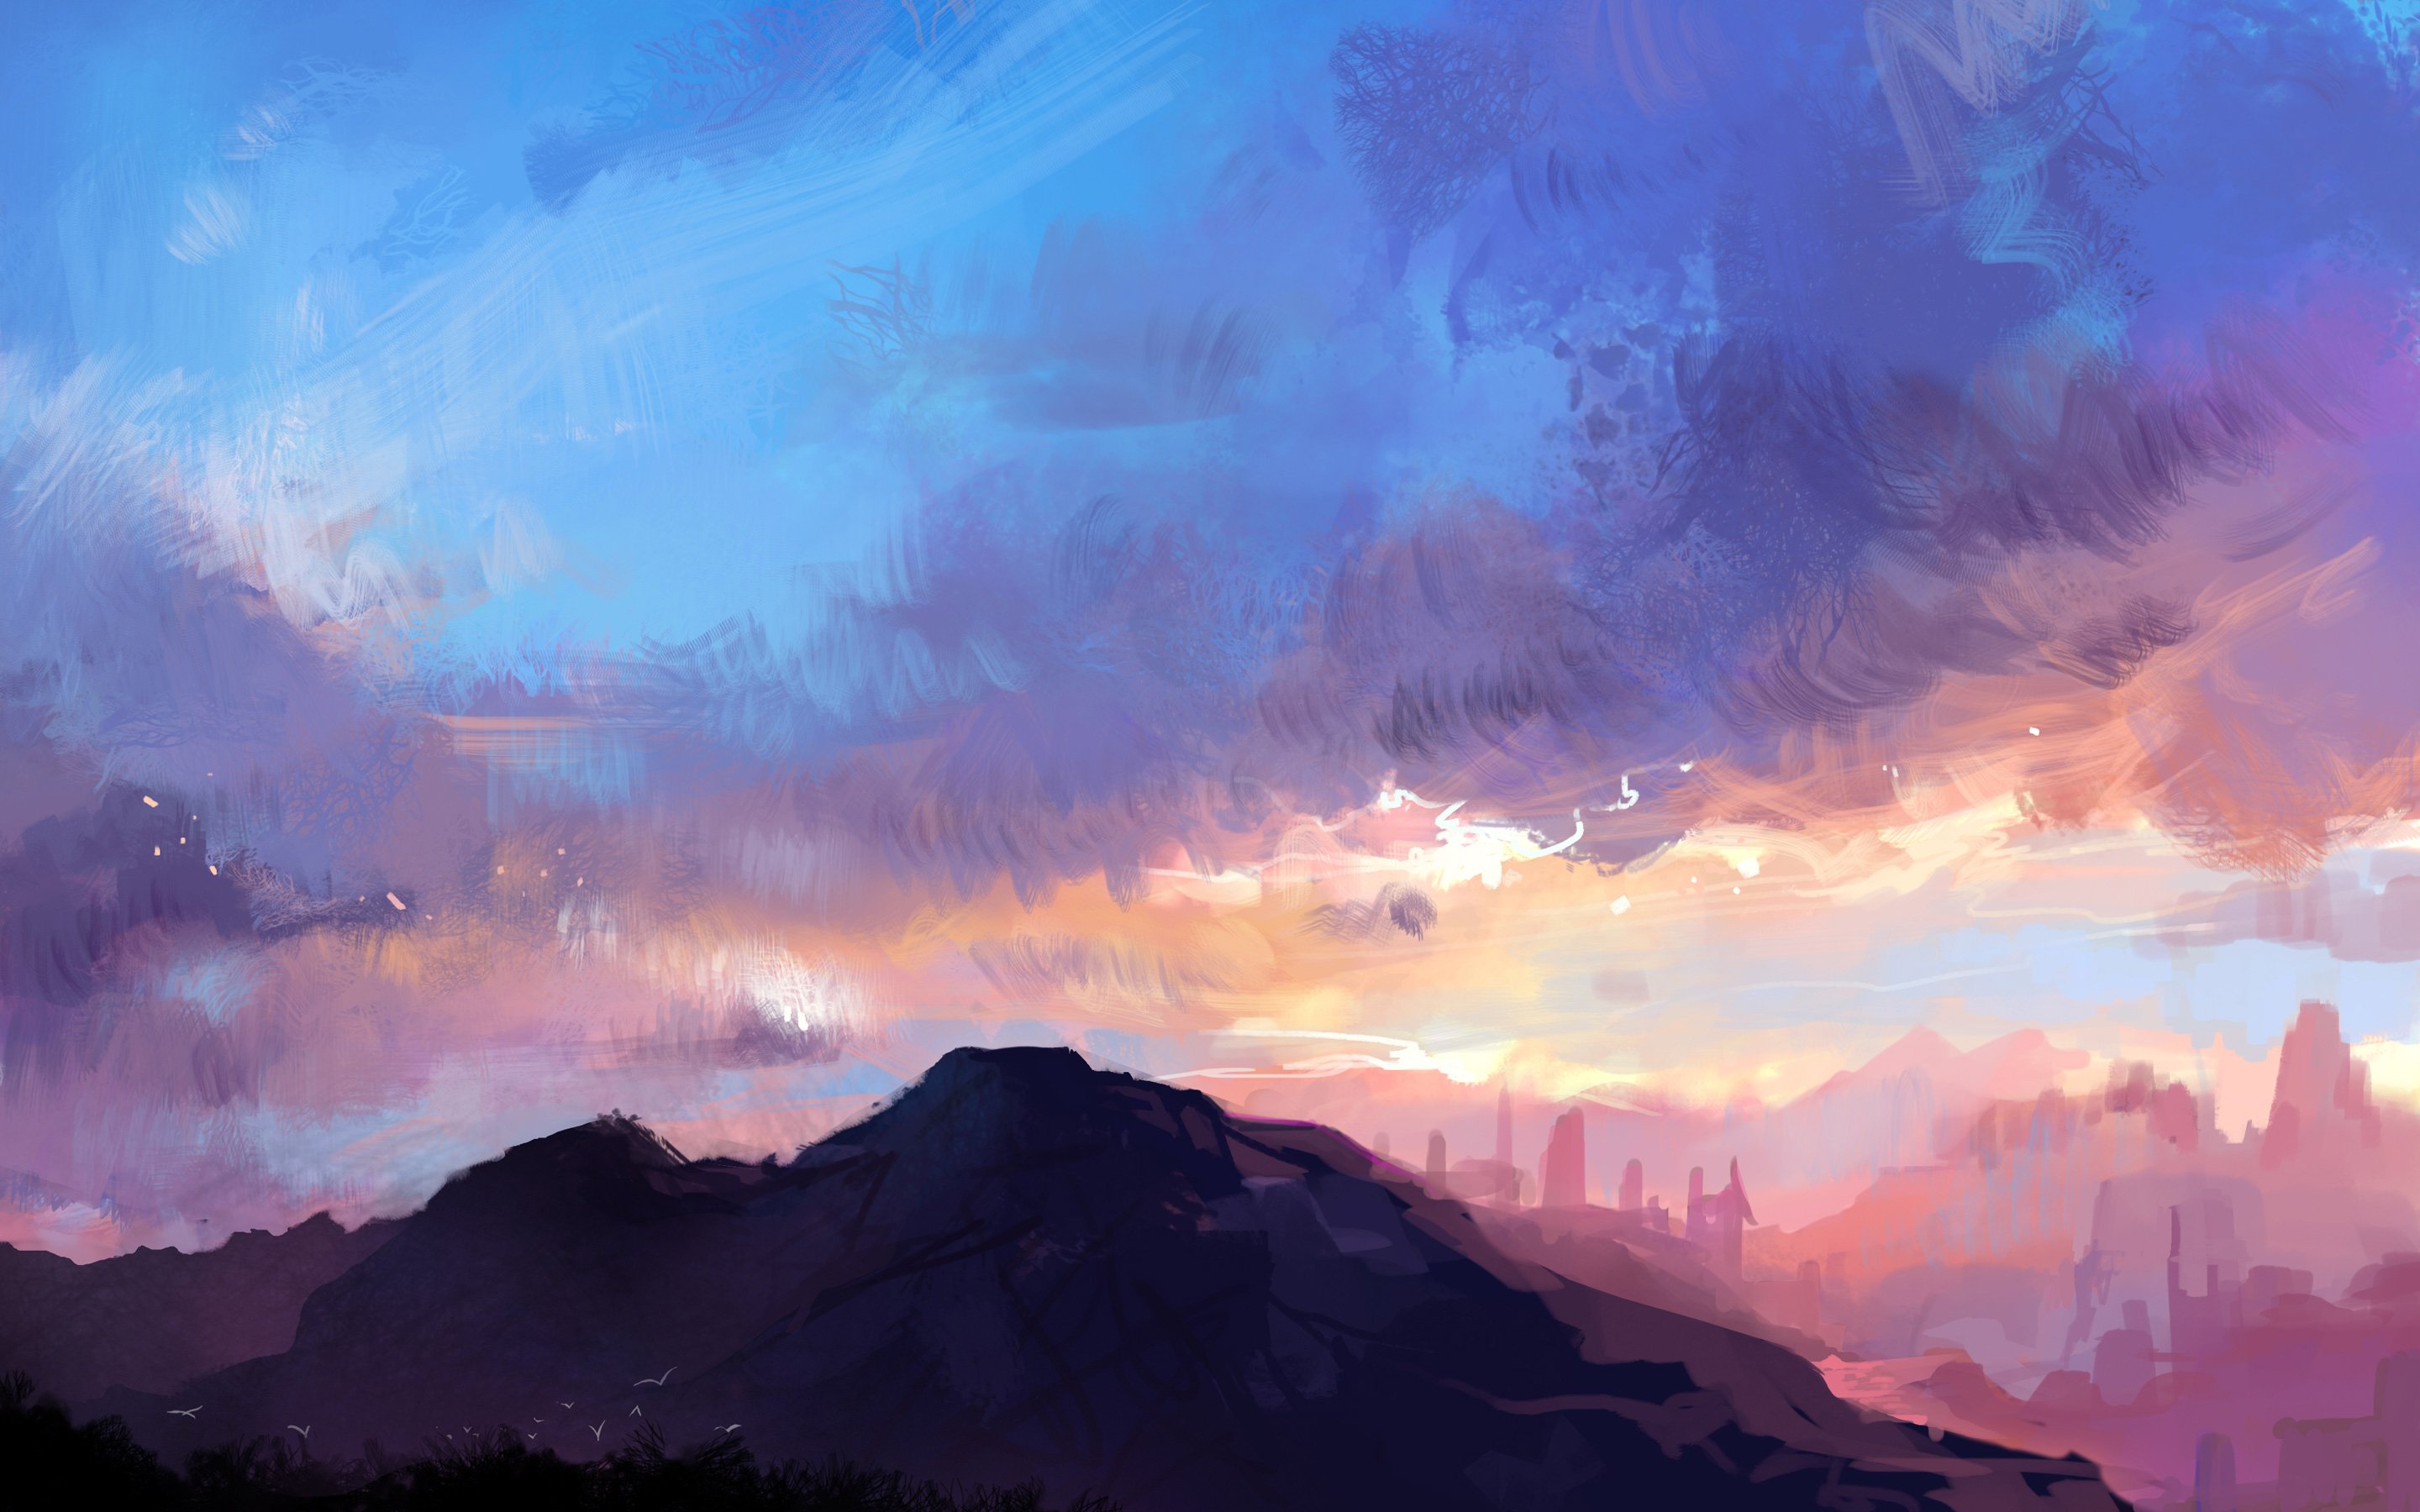 art picture wallpaper,sky,nature,cloud,mountainous landforms,mountain